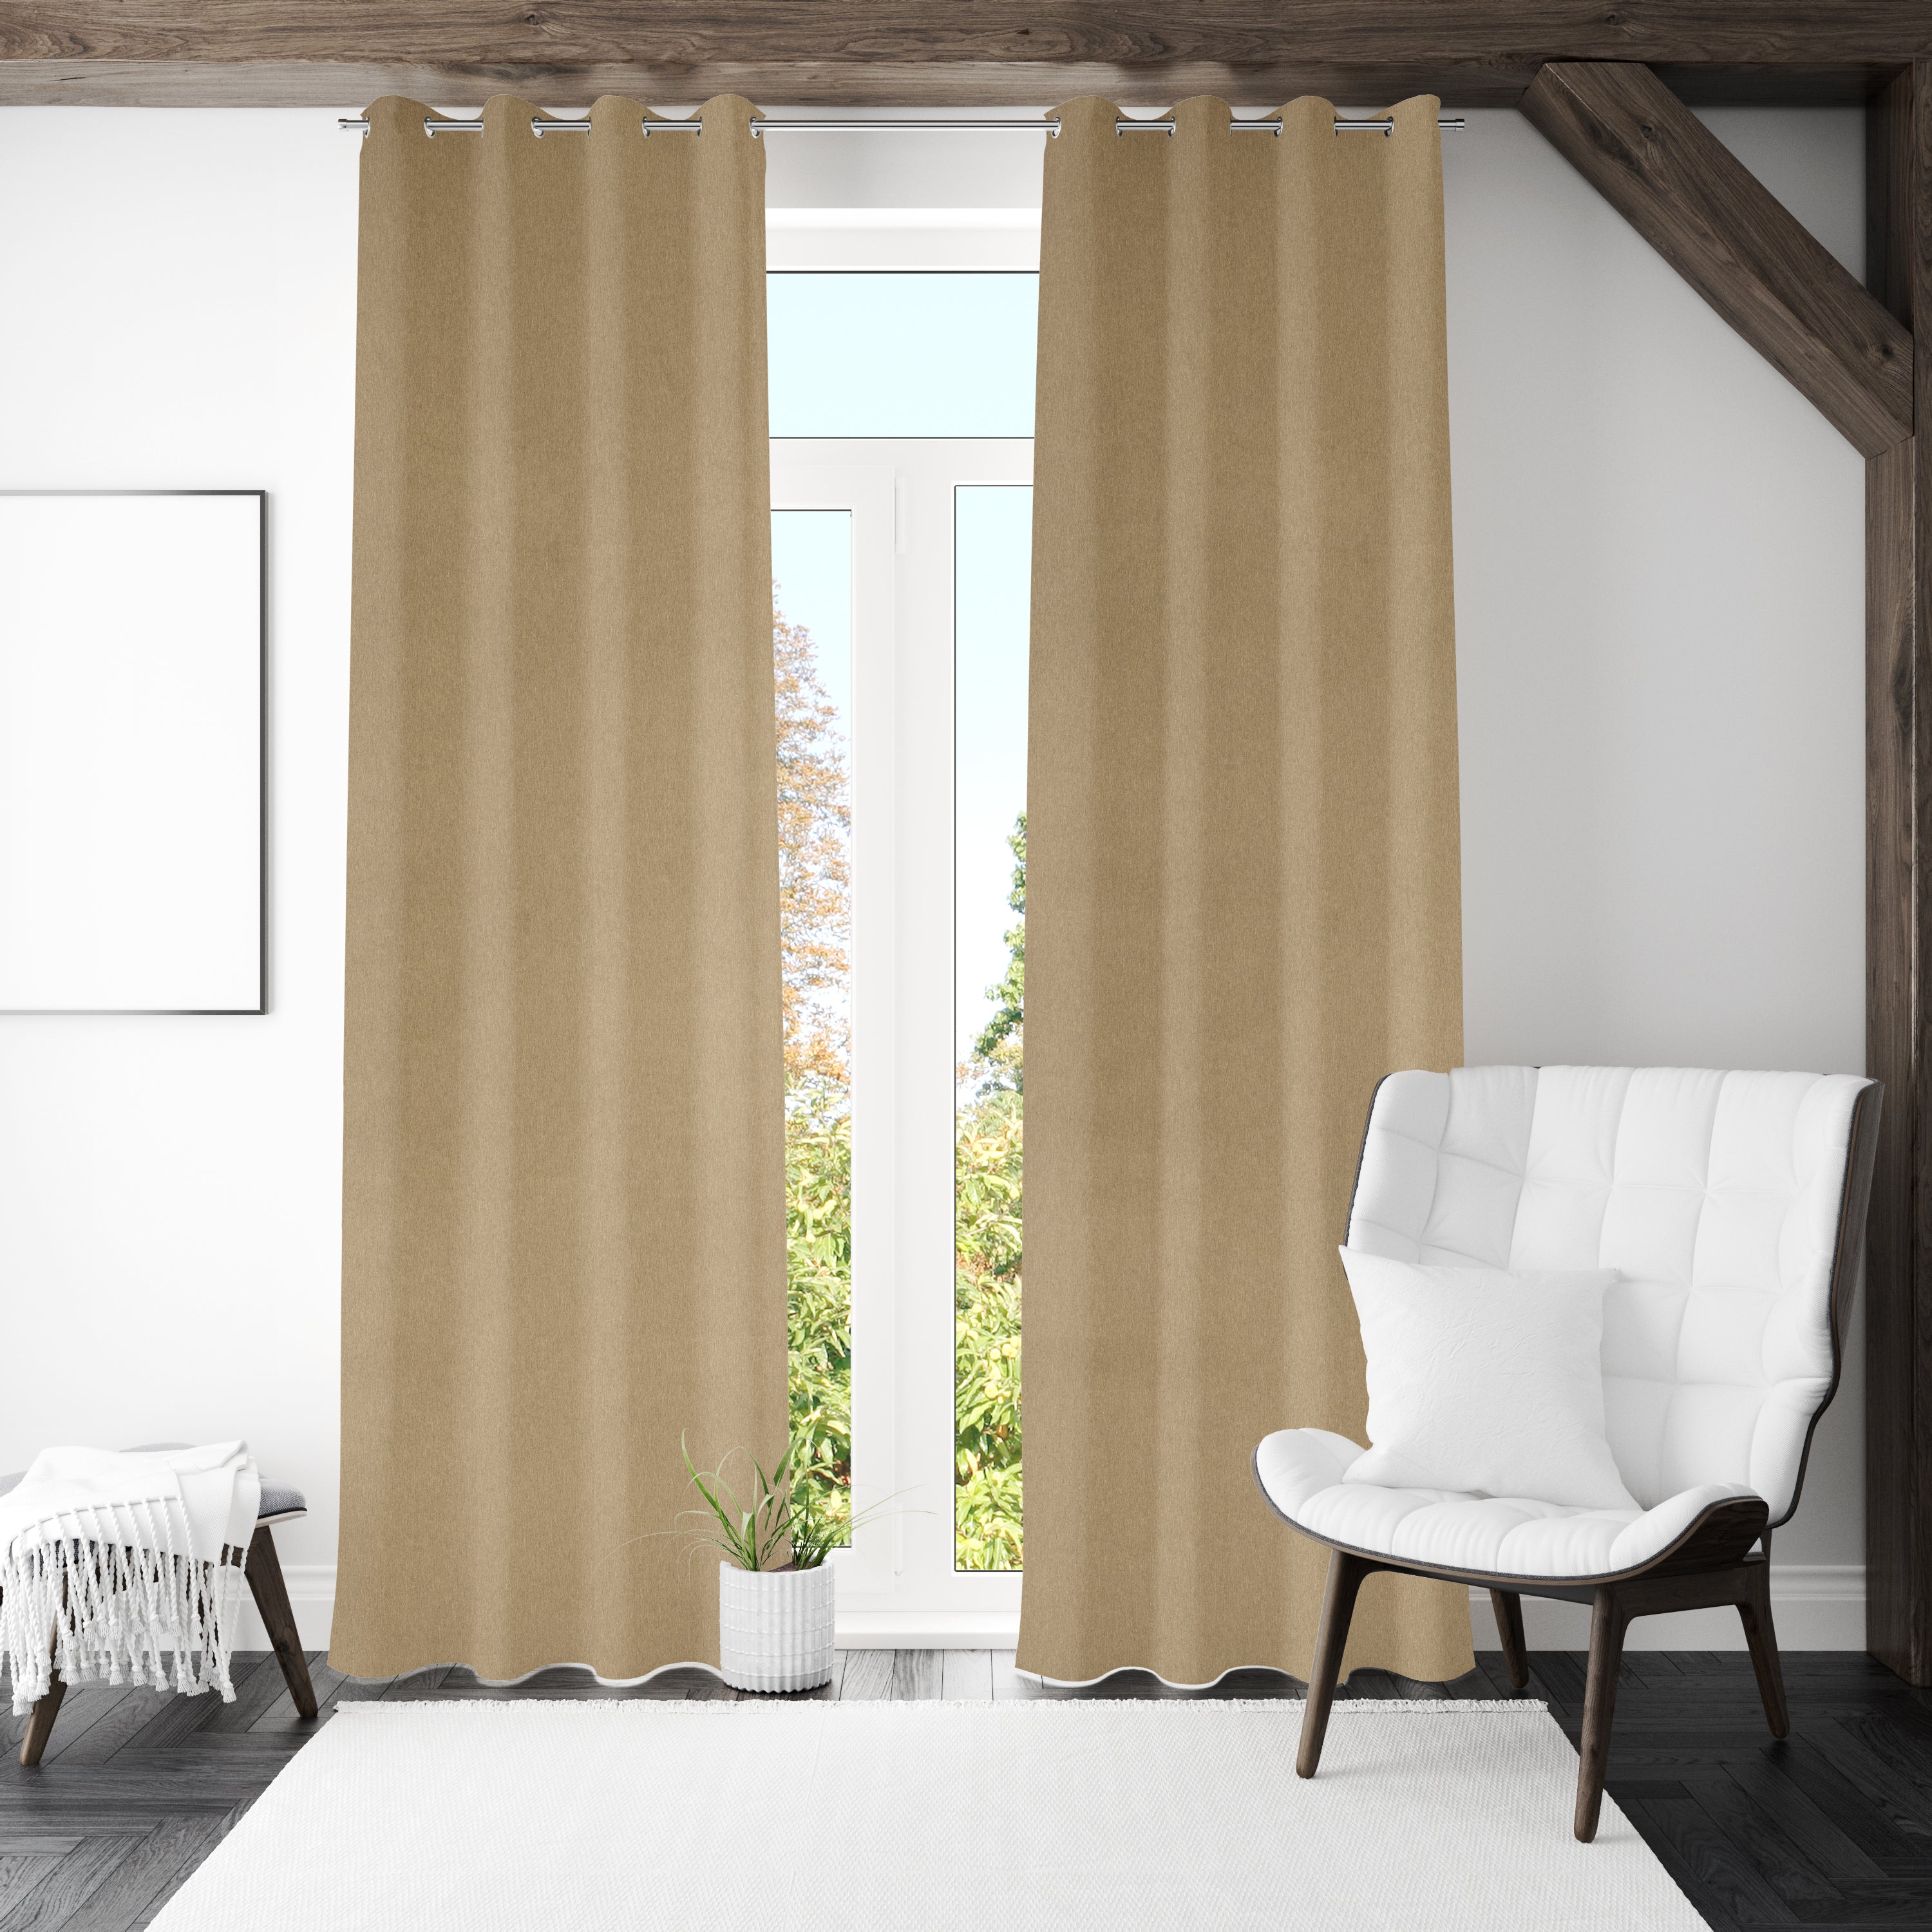 Visto Solid Blackout 9 Ft Polyester Long Door Curtains Set of 2 (Beige)